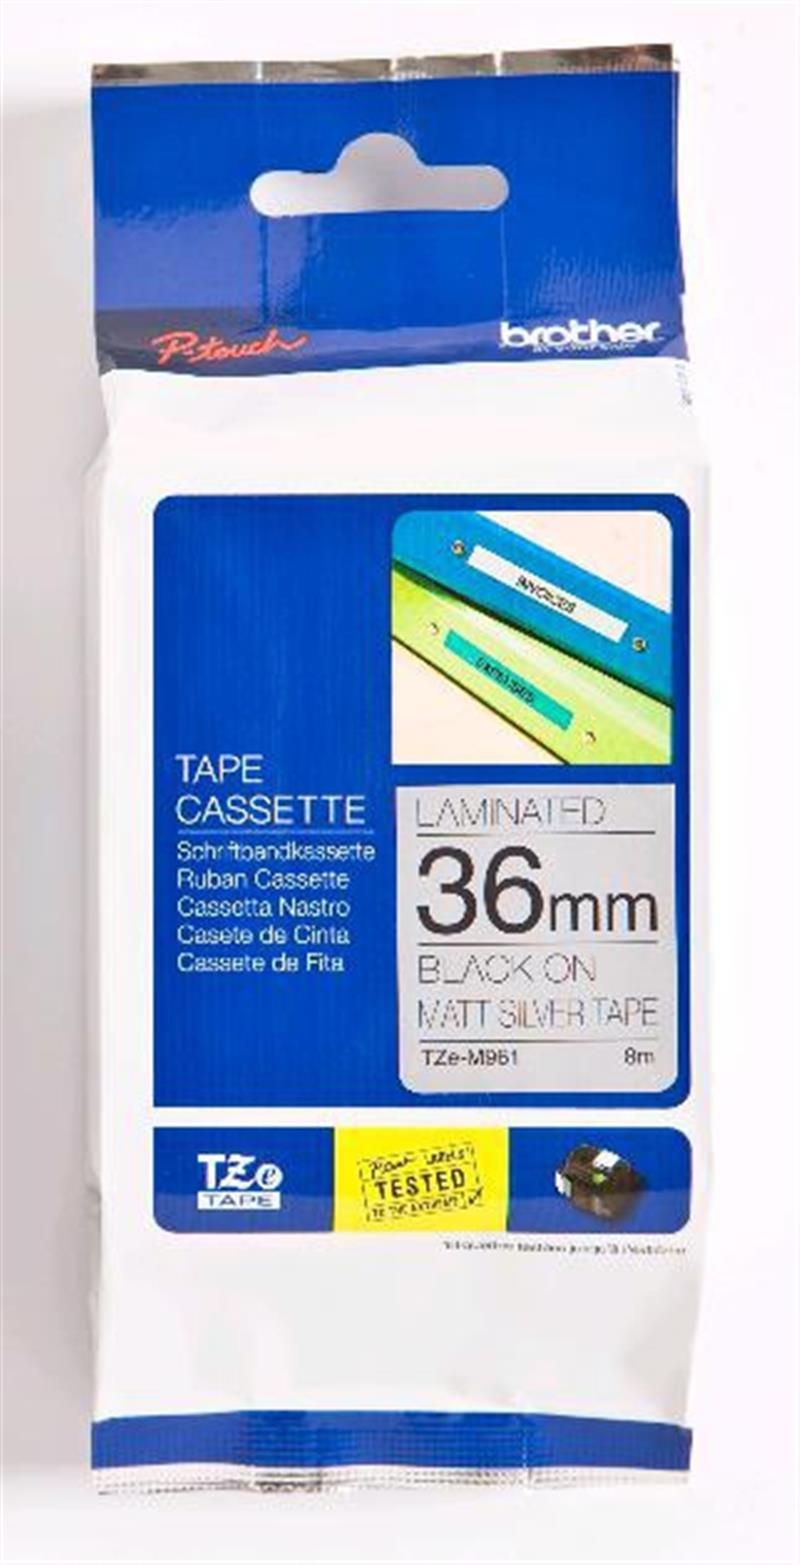 Brother TZe-M961 labelprinter-tape